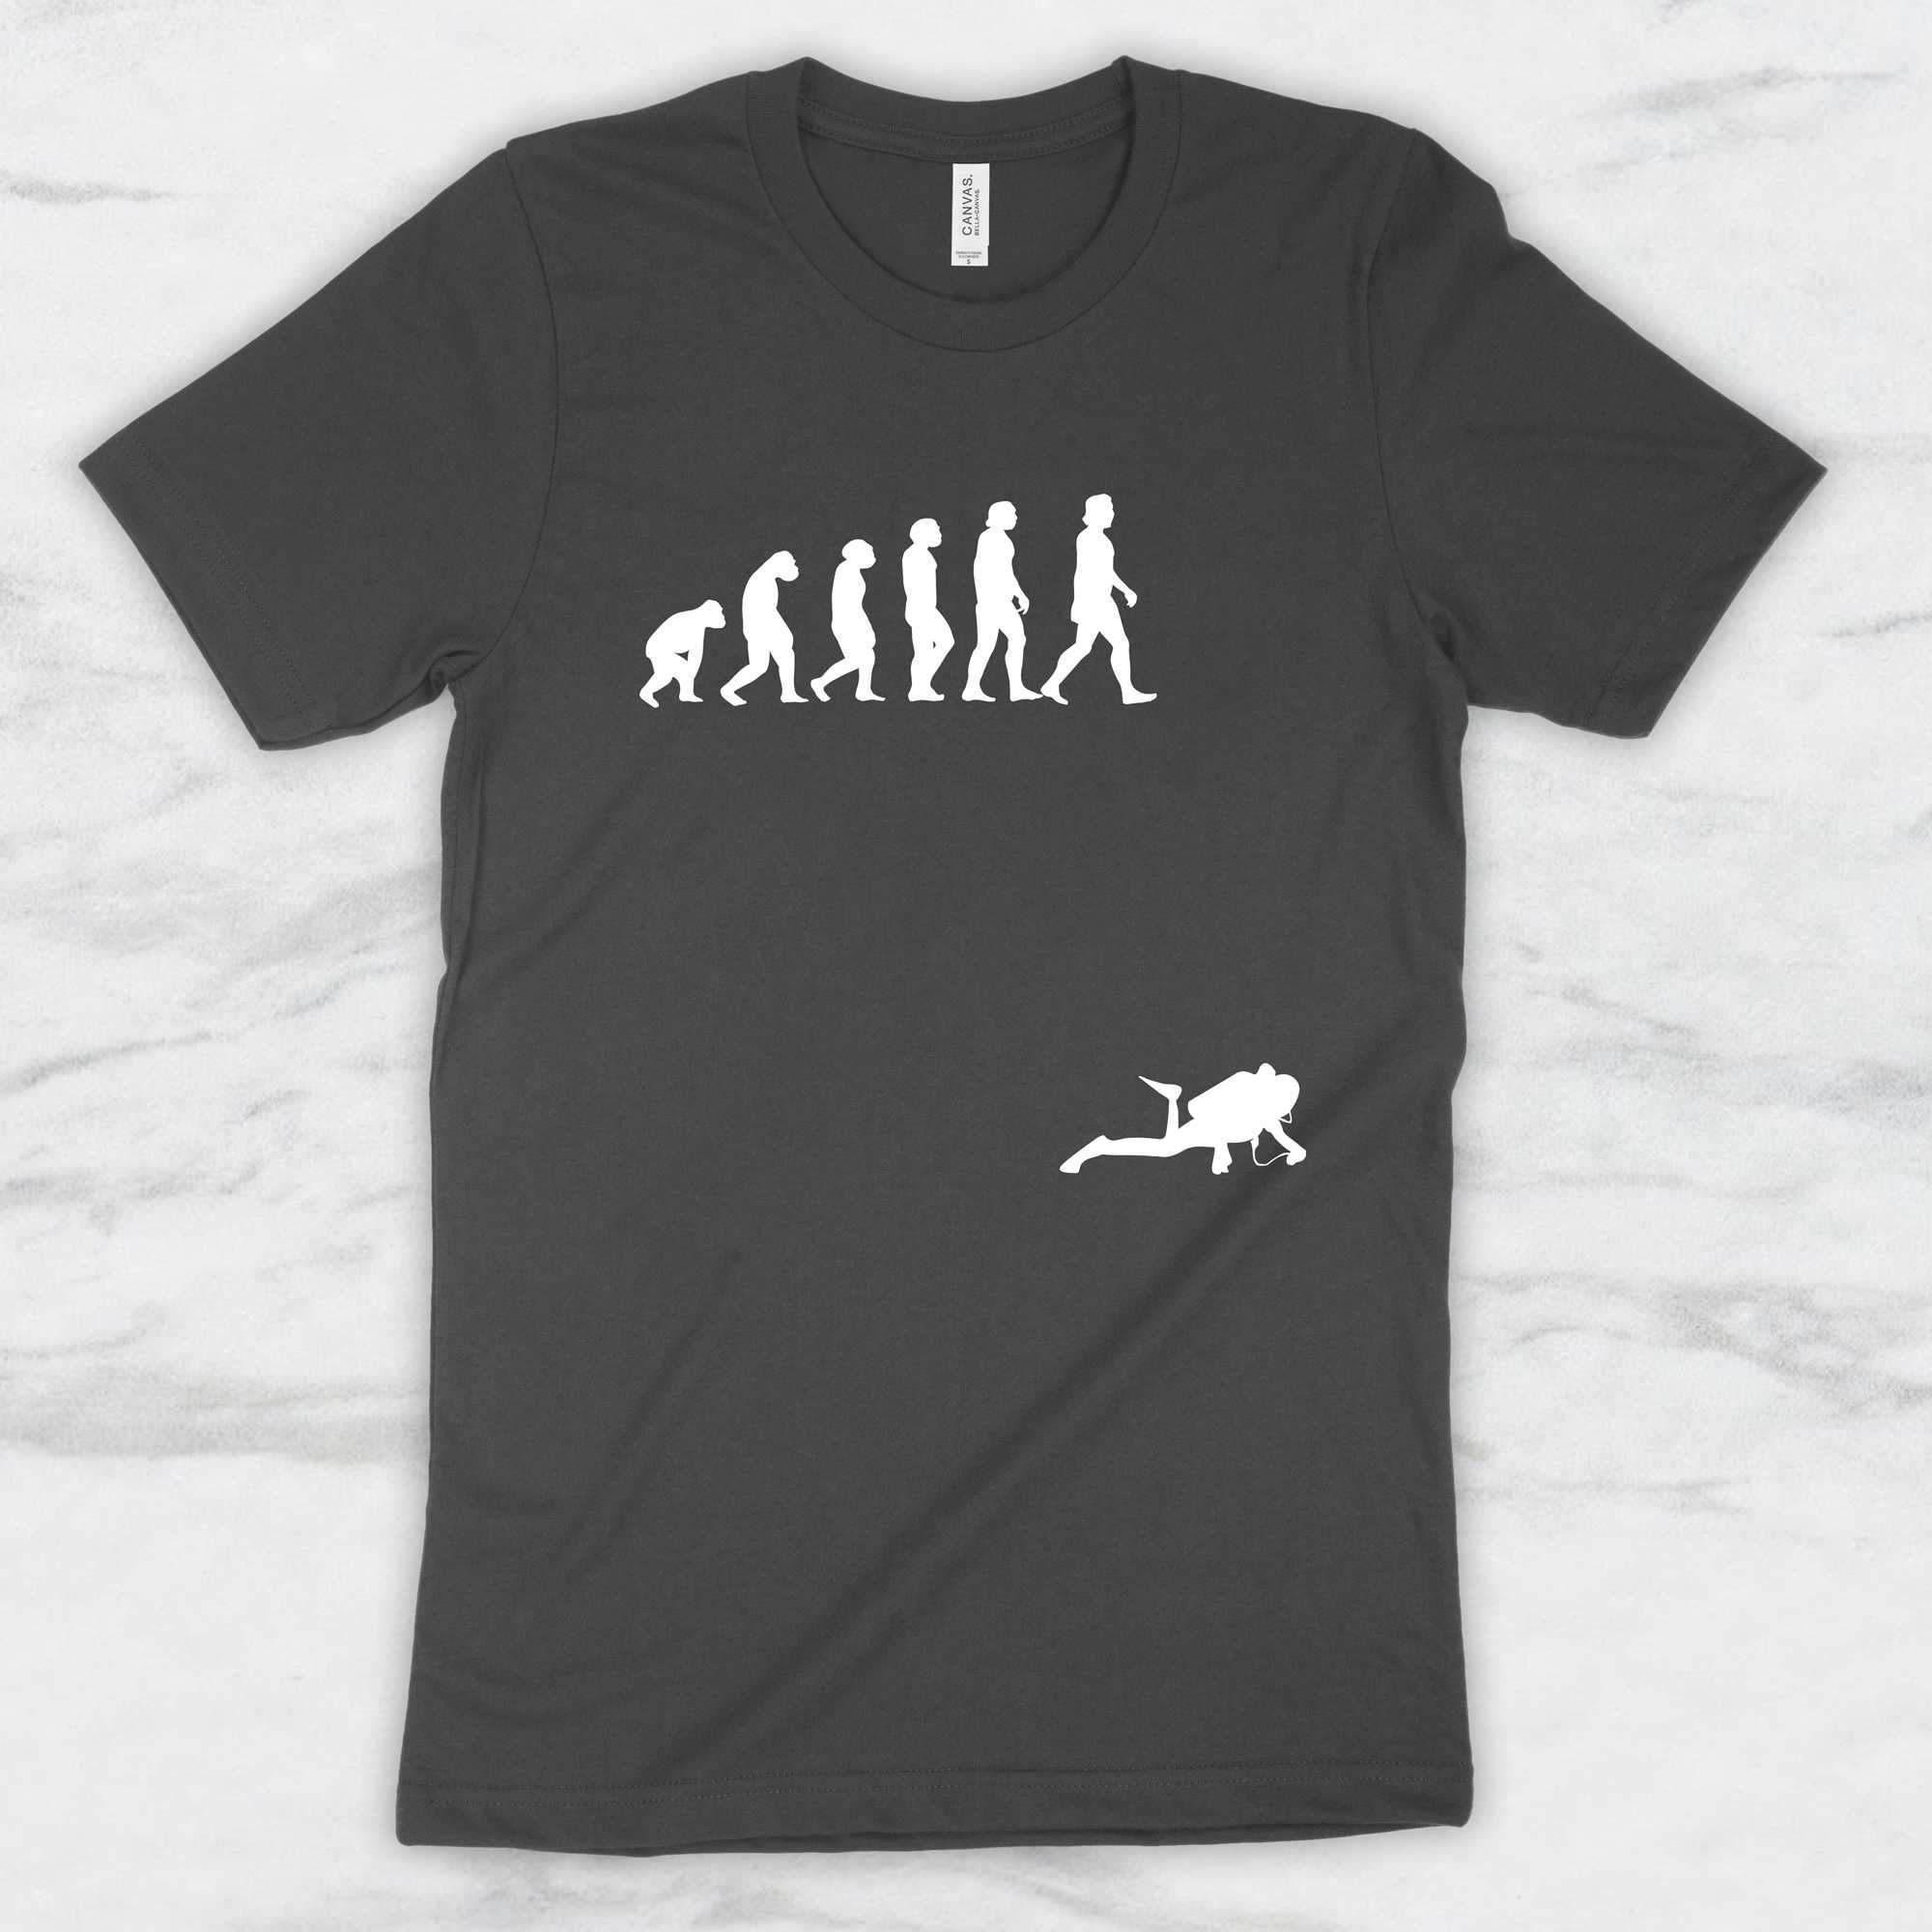 Diver Evolution T-Shirt, Tank Top, Hoodie For Men, Women & Kids